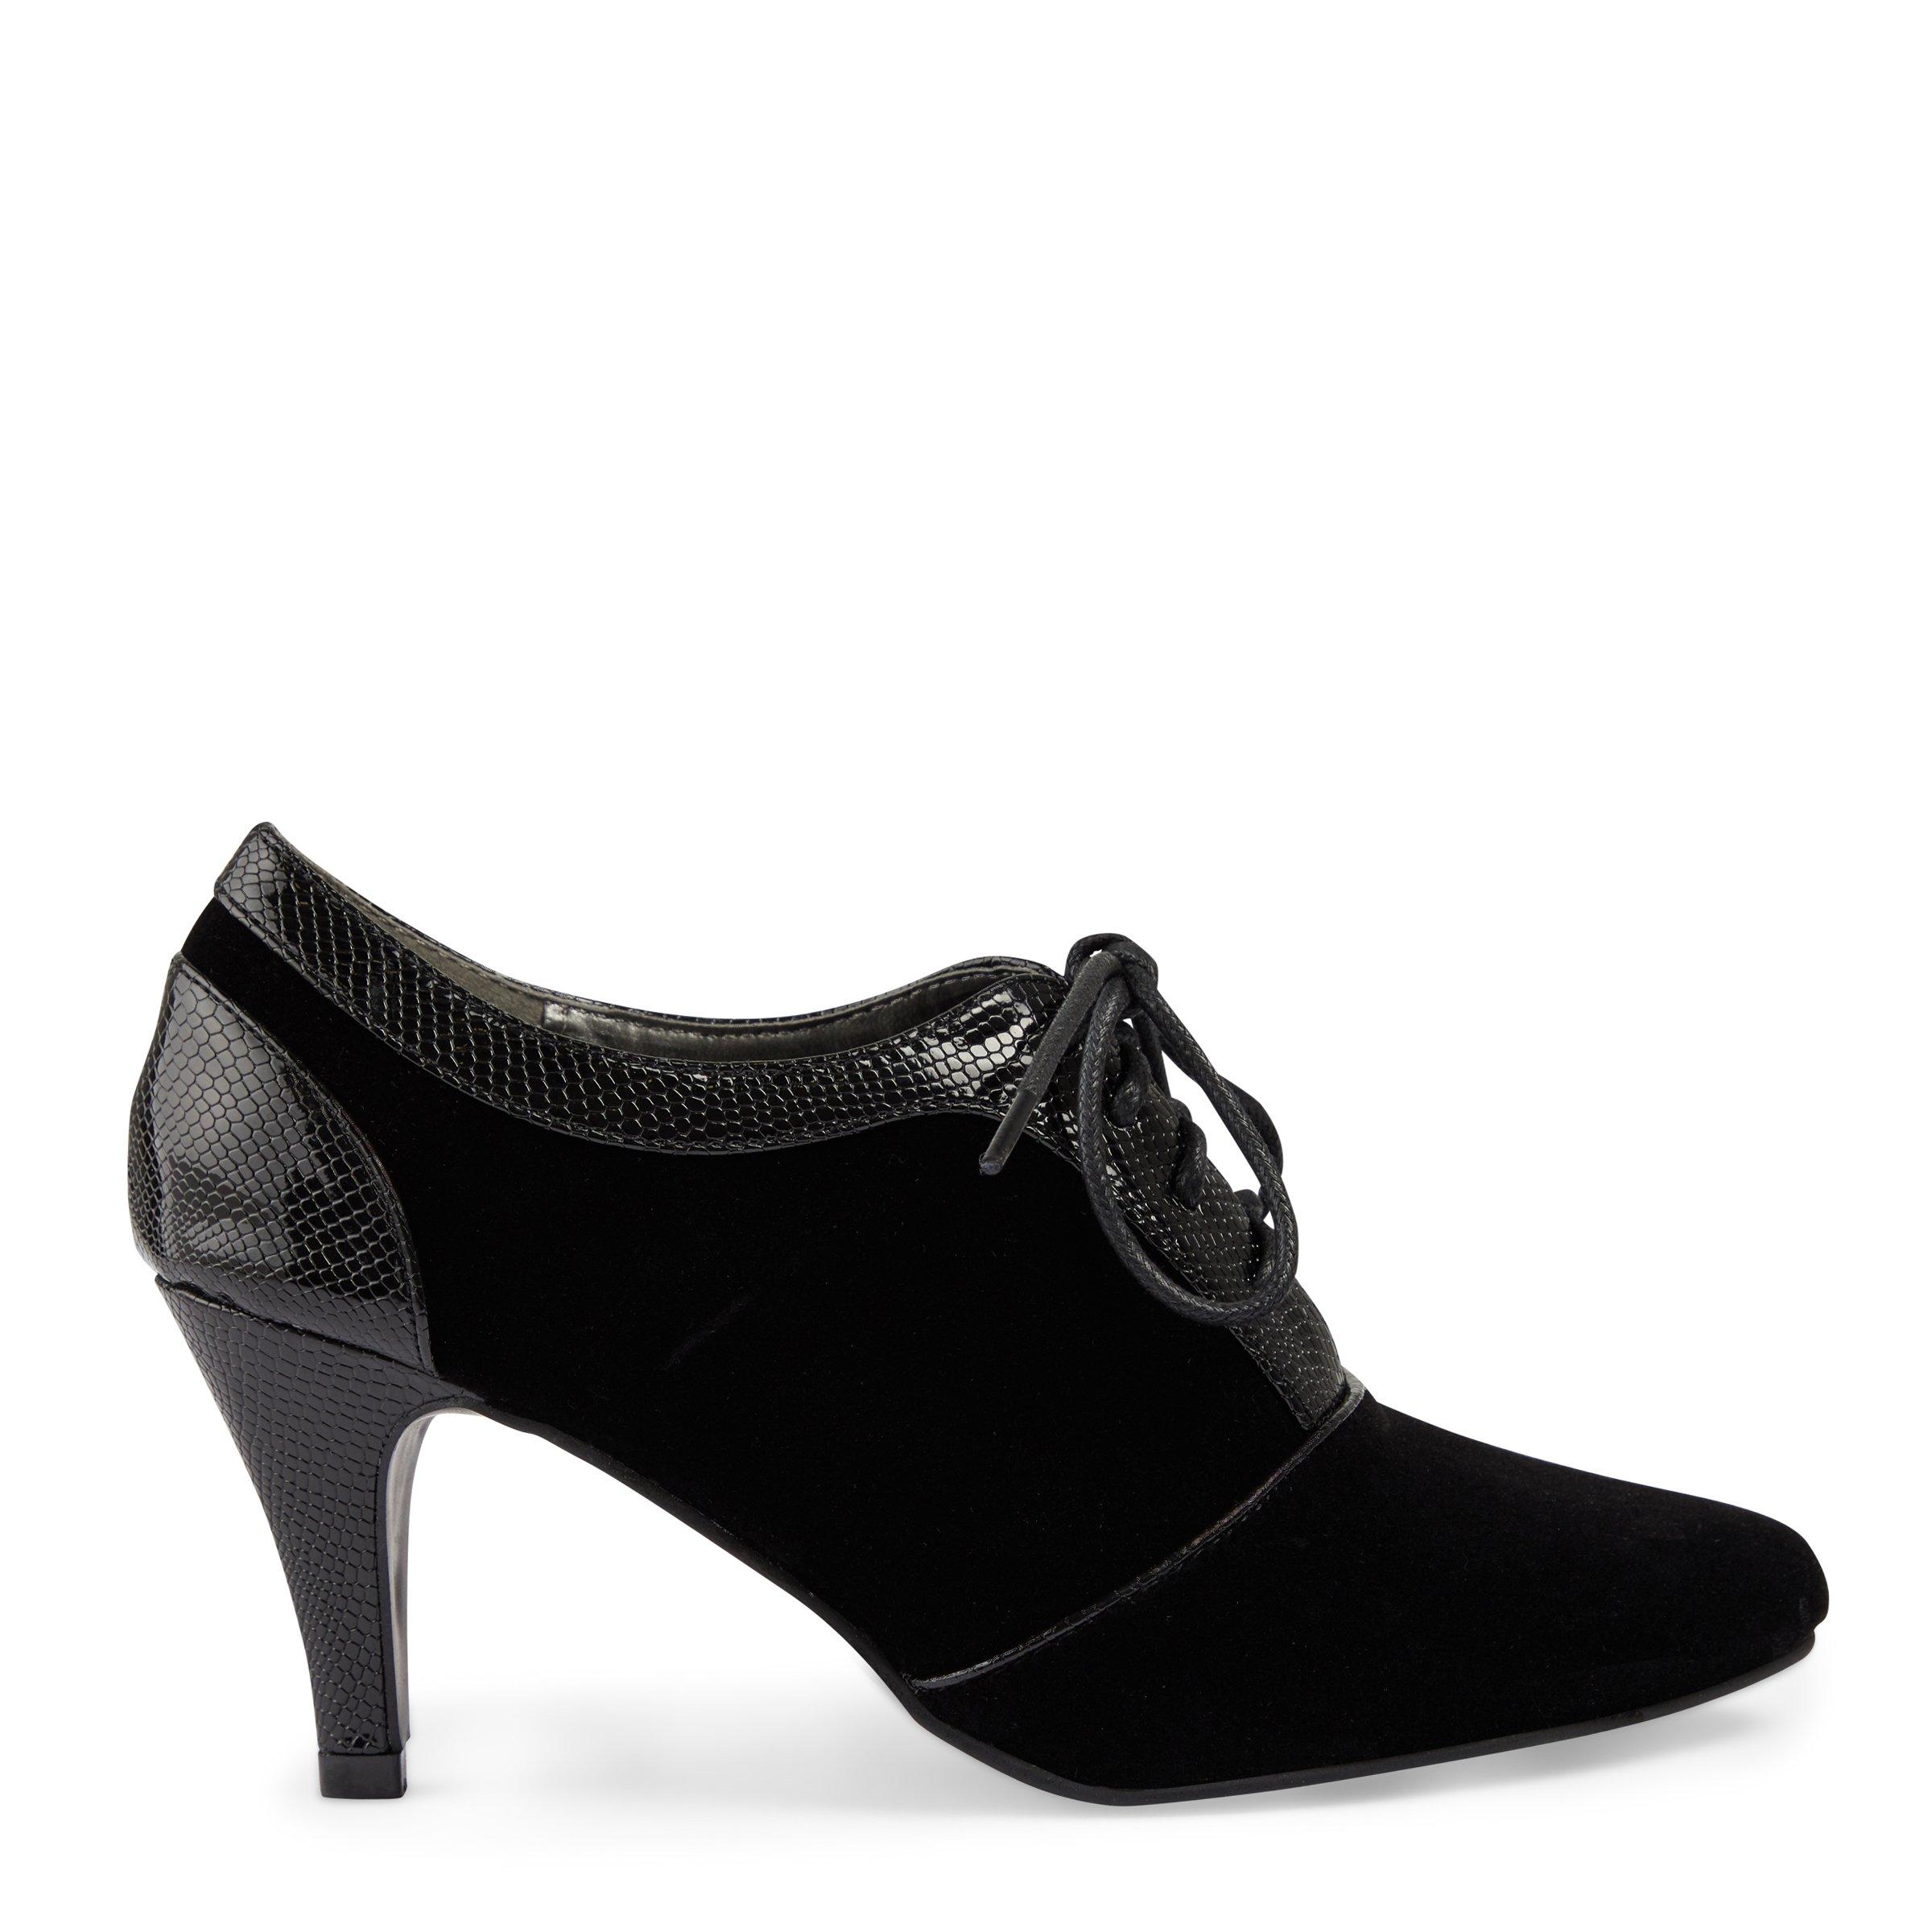 Buy Truworths Black Lace Up Heel Online | Truworths